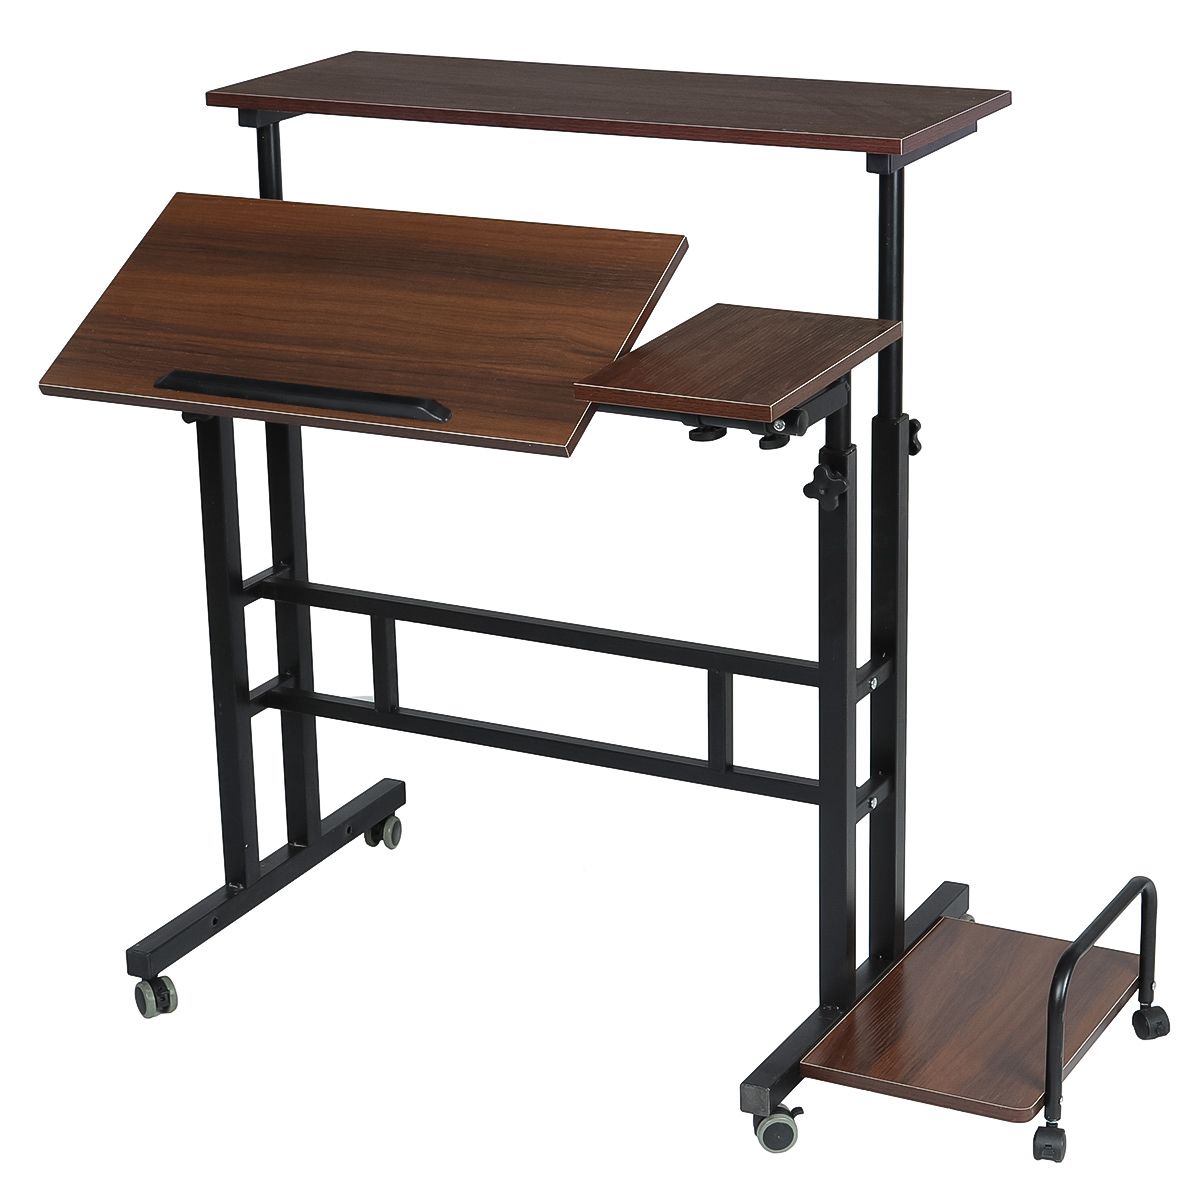 Mobile Stand Up Desk, Adjustable Laptop Desk With Wheels Host Storage Intended For Sit Stand Mobile Desks (View 8 of 15)